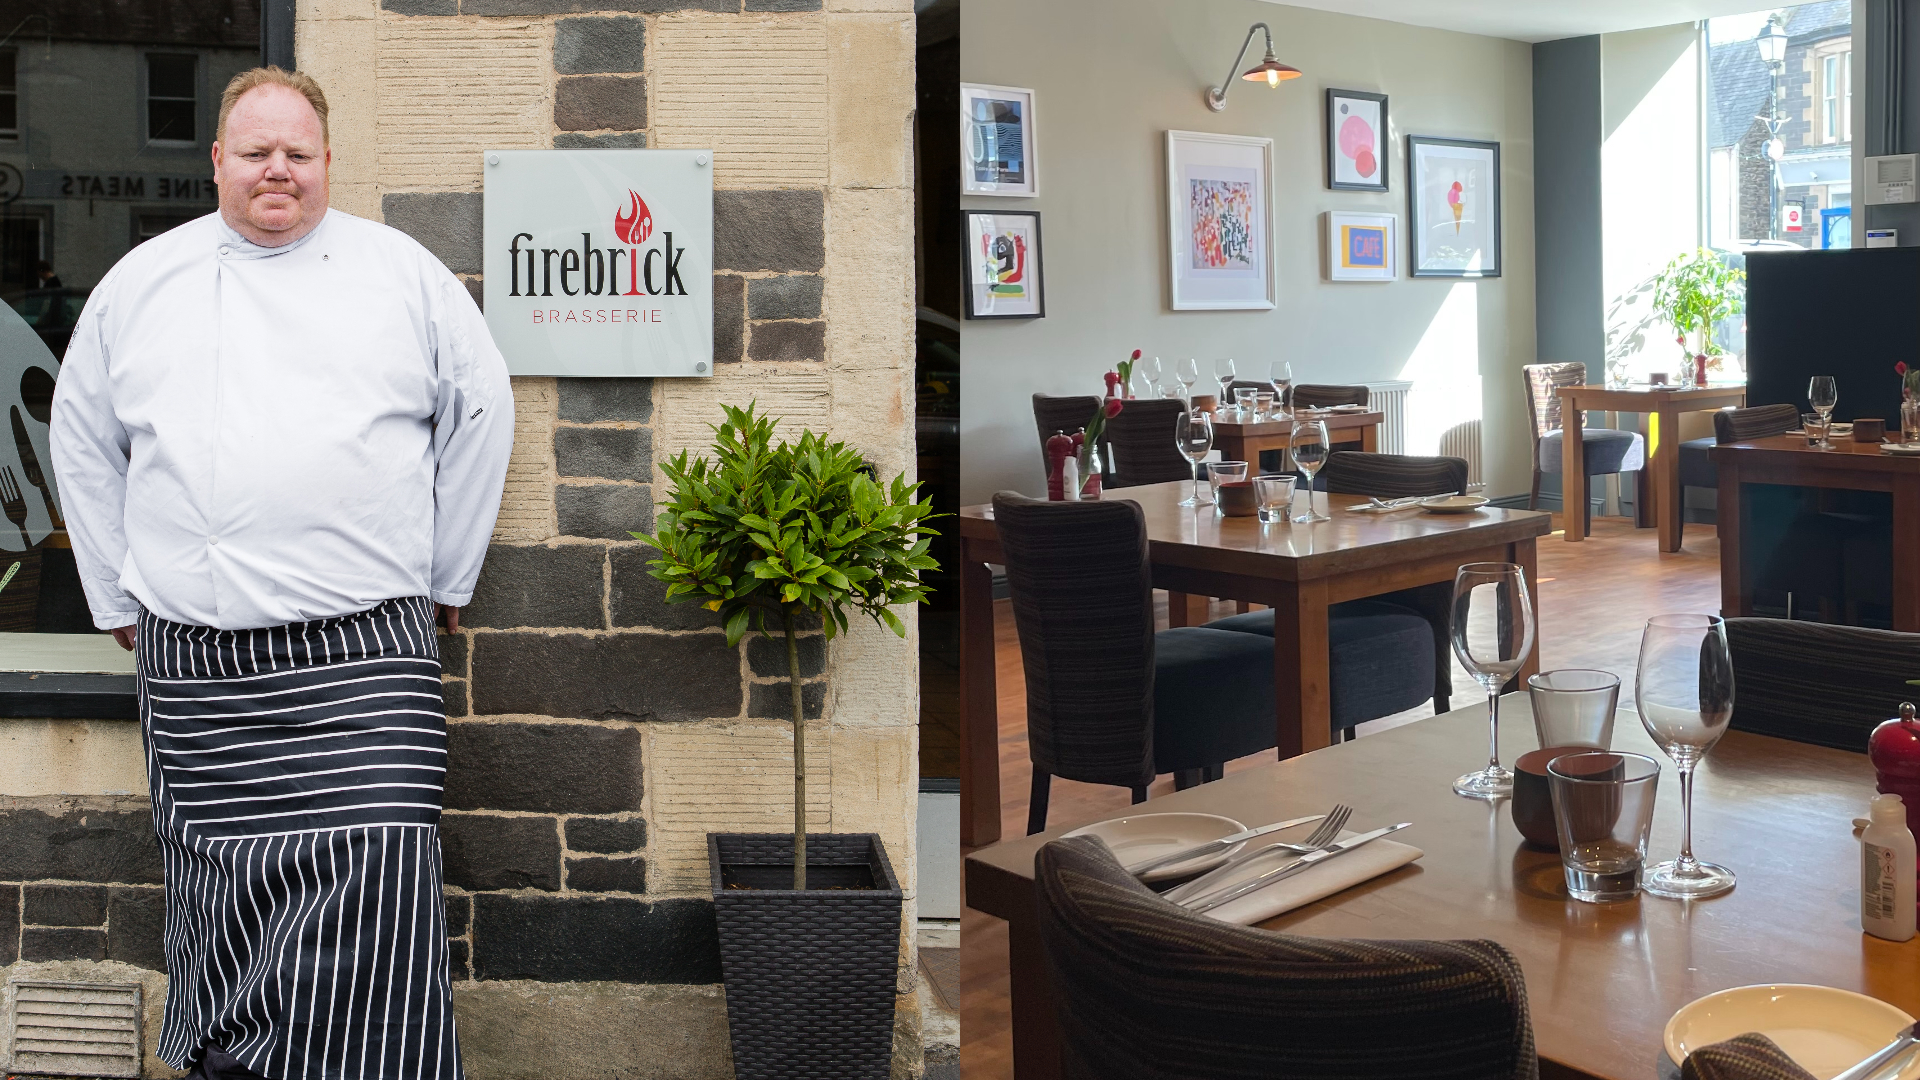 David Haetzman, 49, had to shut the doors to his restaurant, the Firebrick Brasserie in Lauder, Scotland, this week